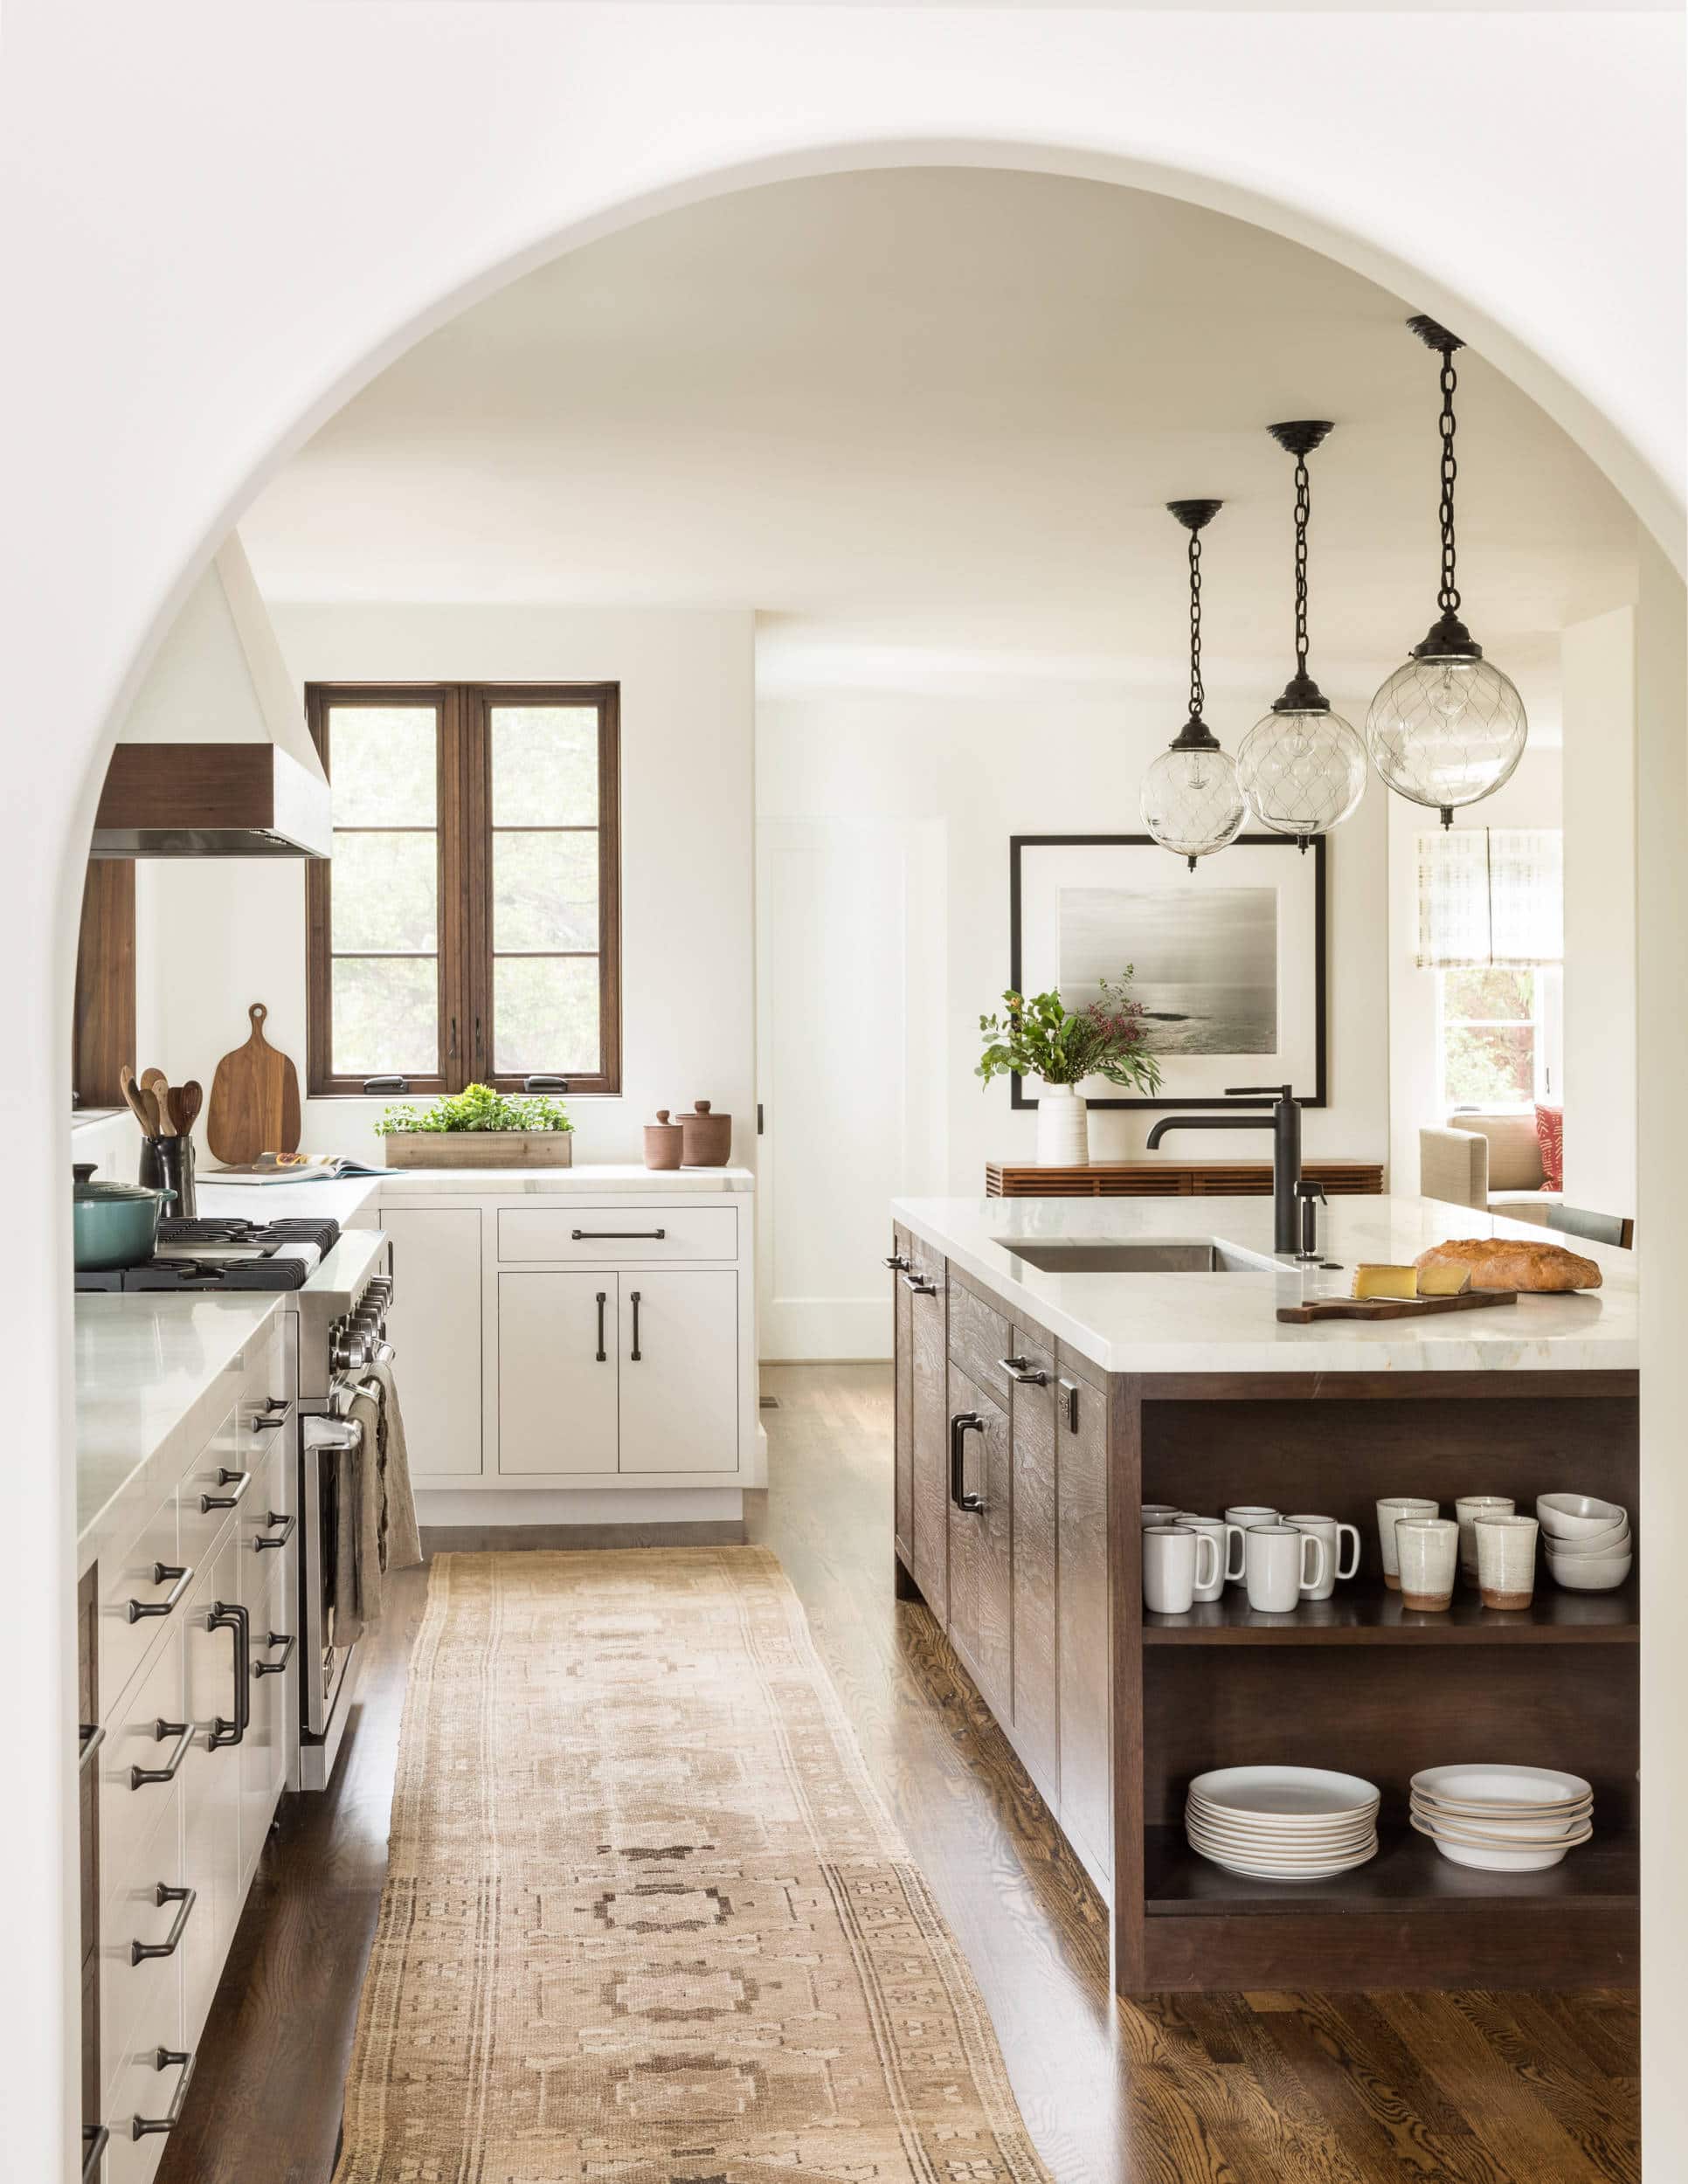 California Casual Design home tour in Hillsborough featuring modern warm neutral kitchen with a dark wood kitchen island